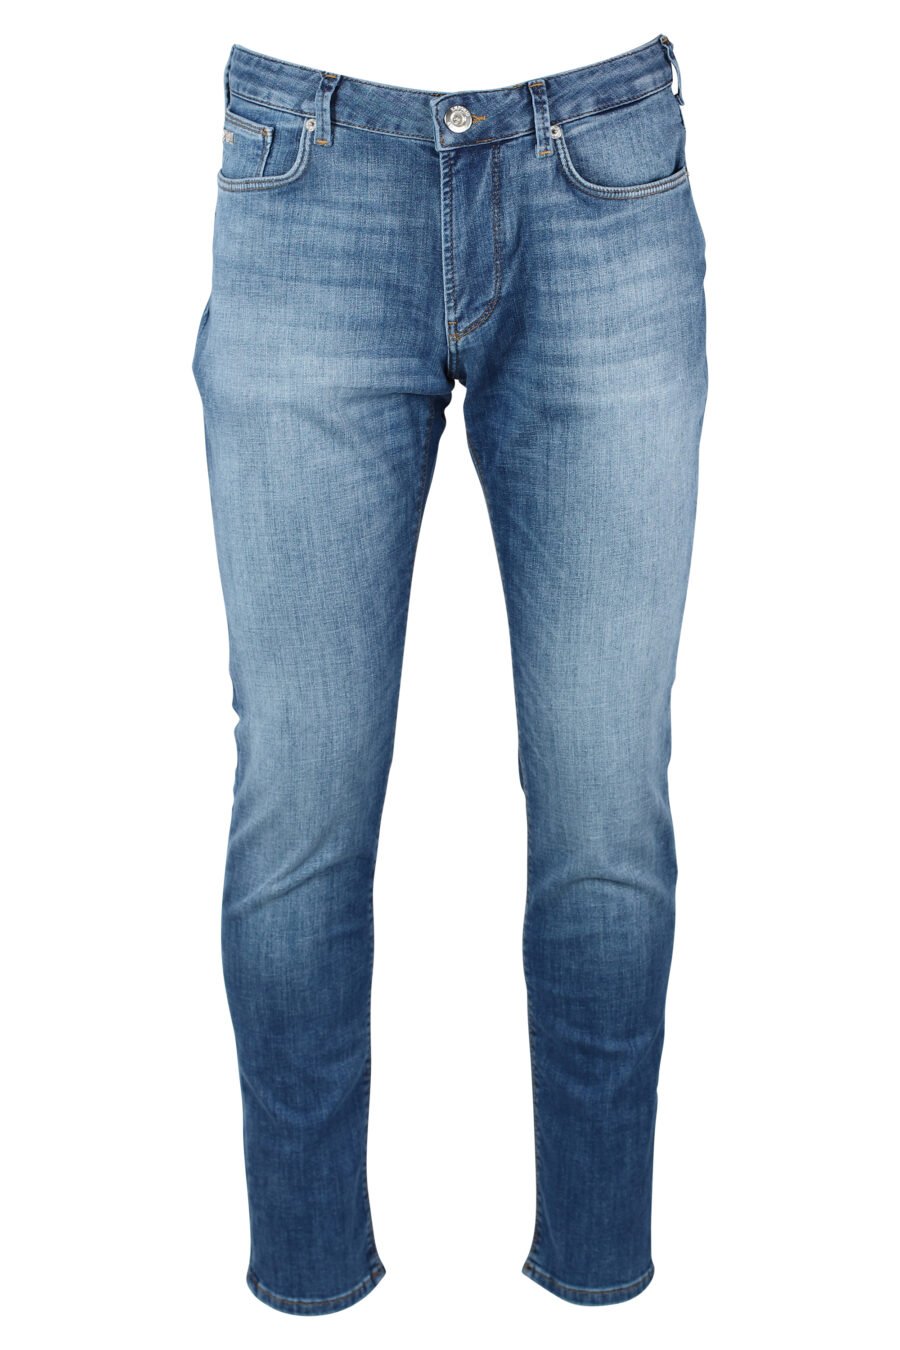 Pantalon en jean bleu avec minilogue en métal - IMG 9920 1